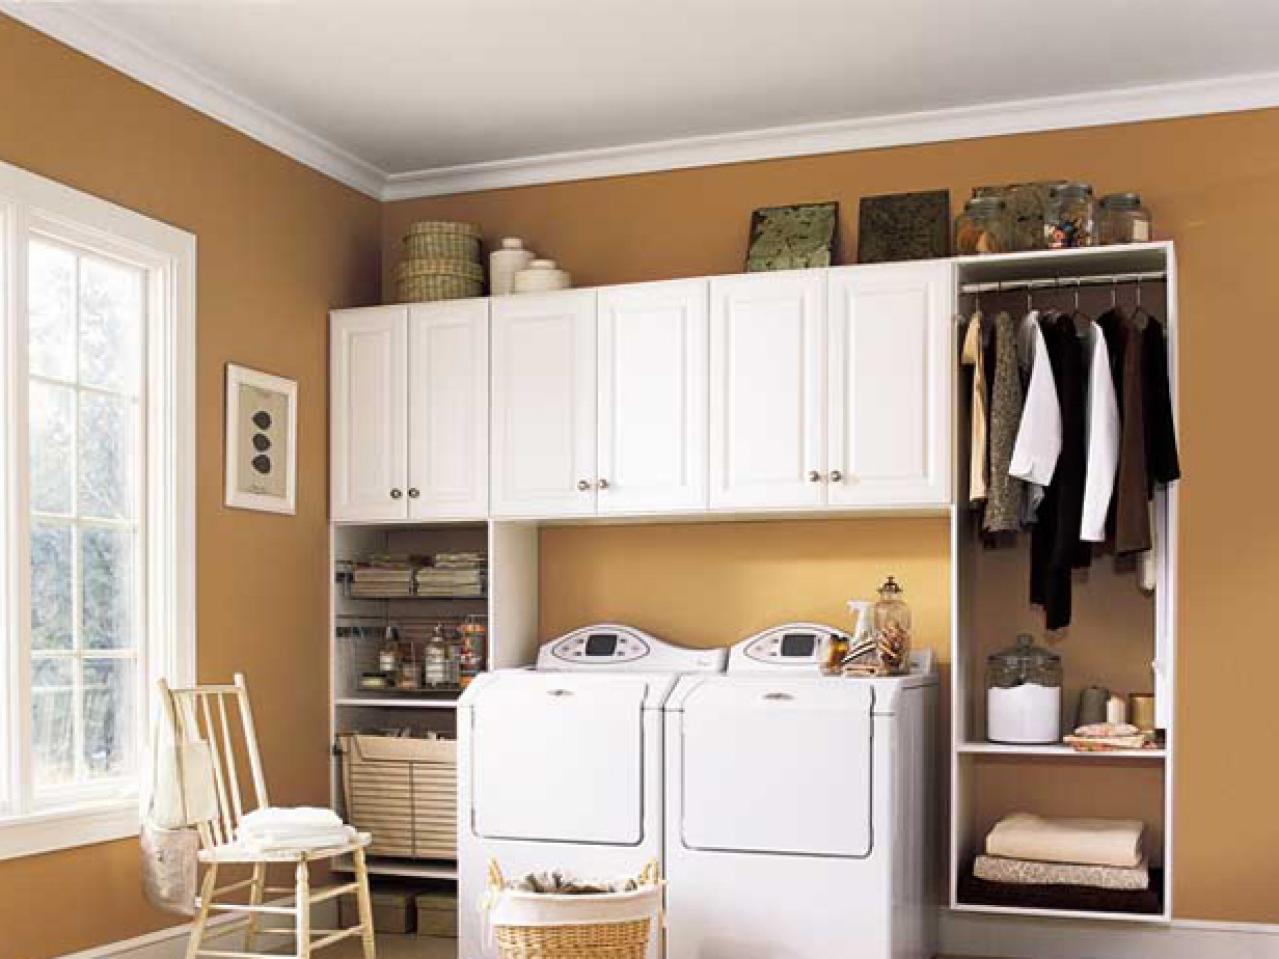 Laundry Room Storage Ideas Diy